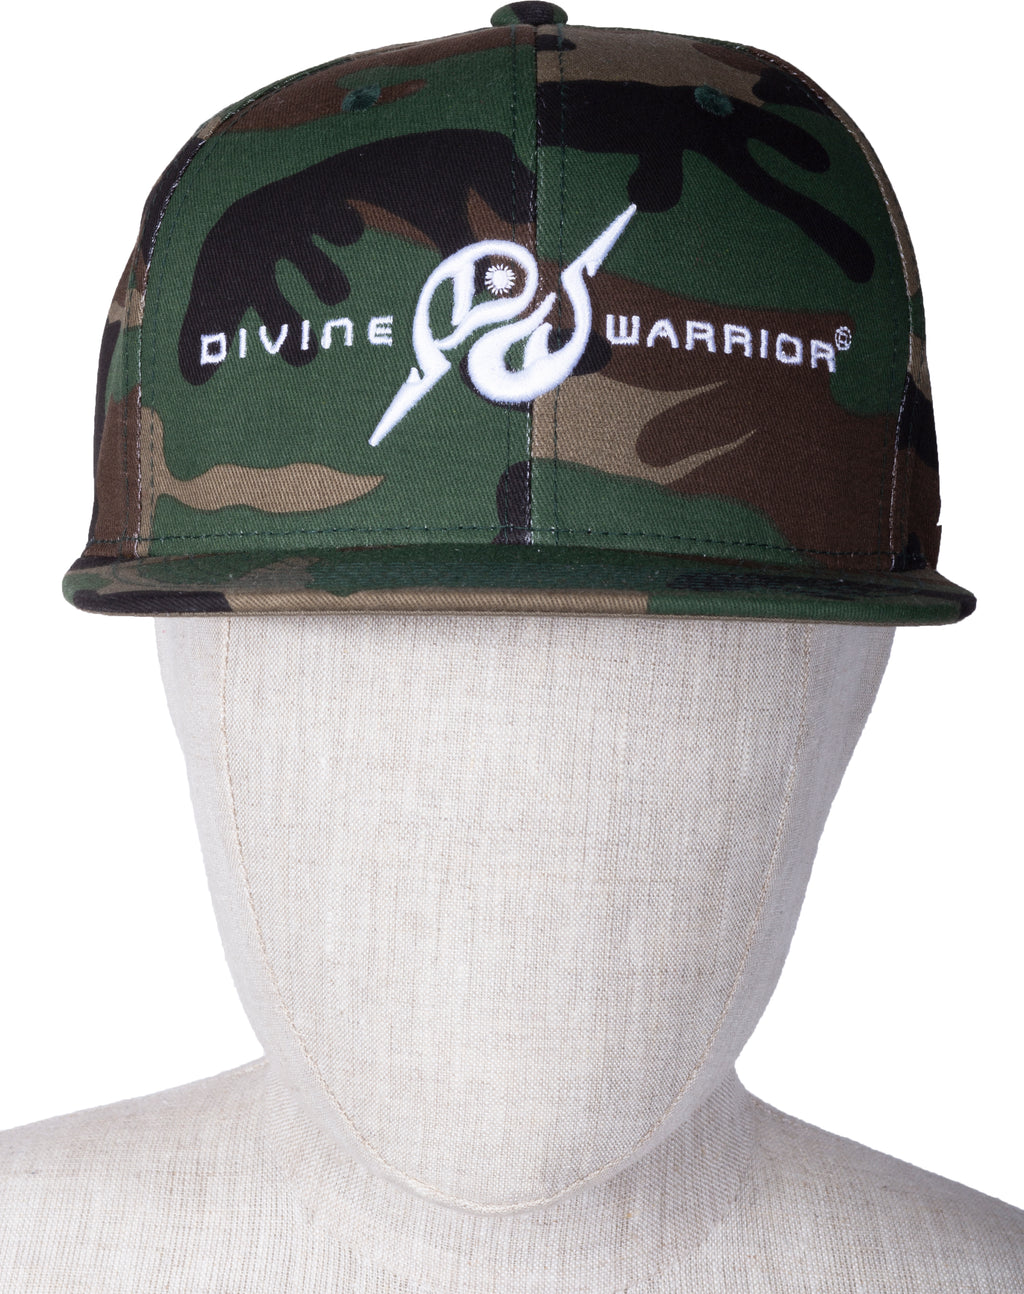 MIRARI® // Divine Warrior® Collection, Green Camo Hat